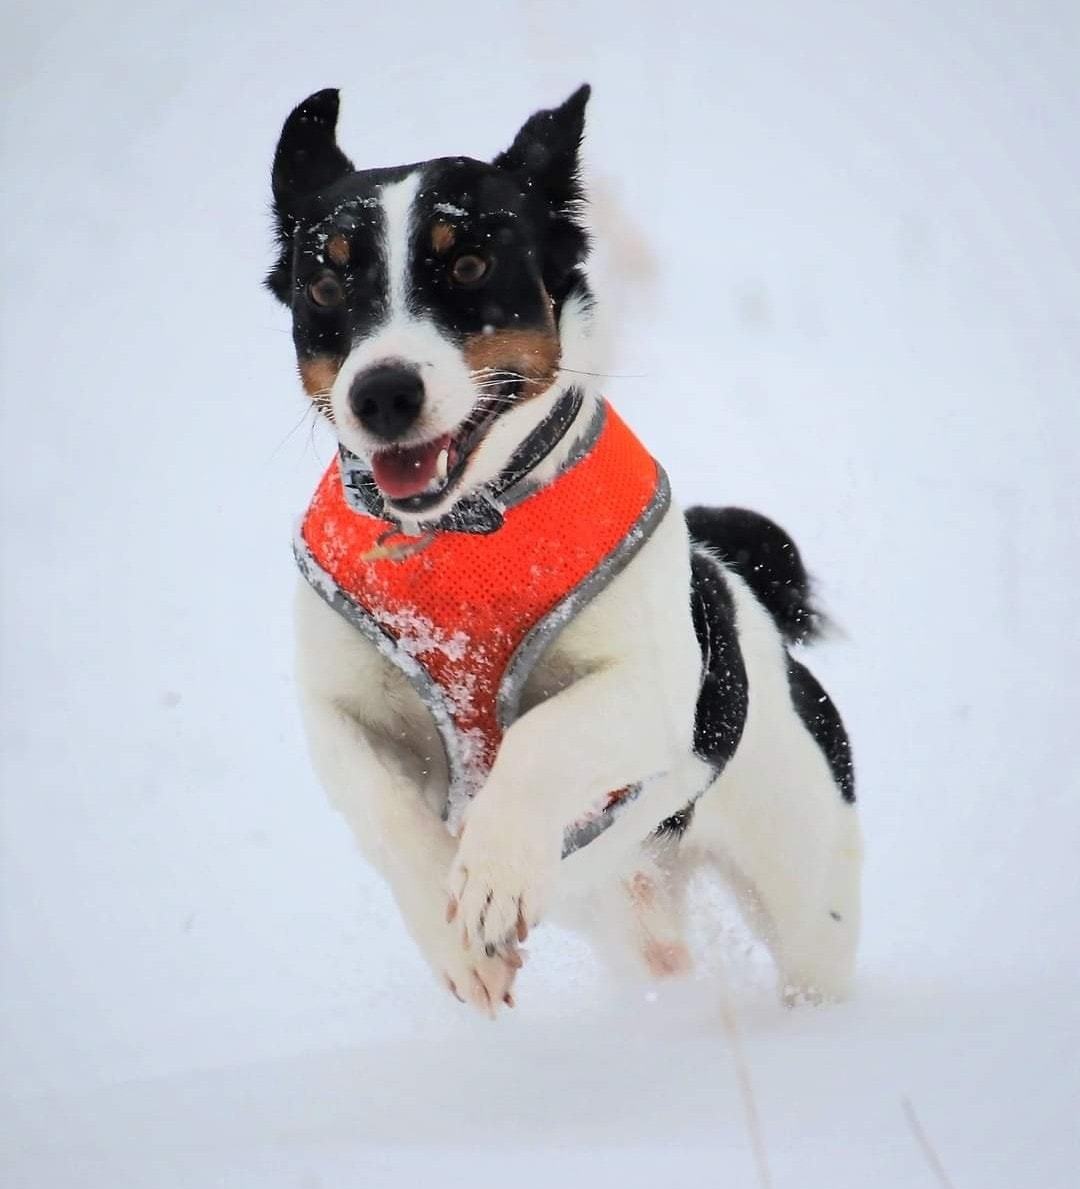 Mark La Roberts dog Dougie enjoying a snow day.